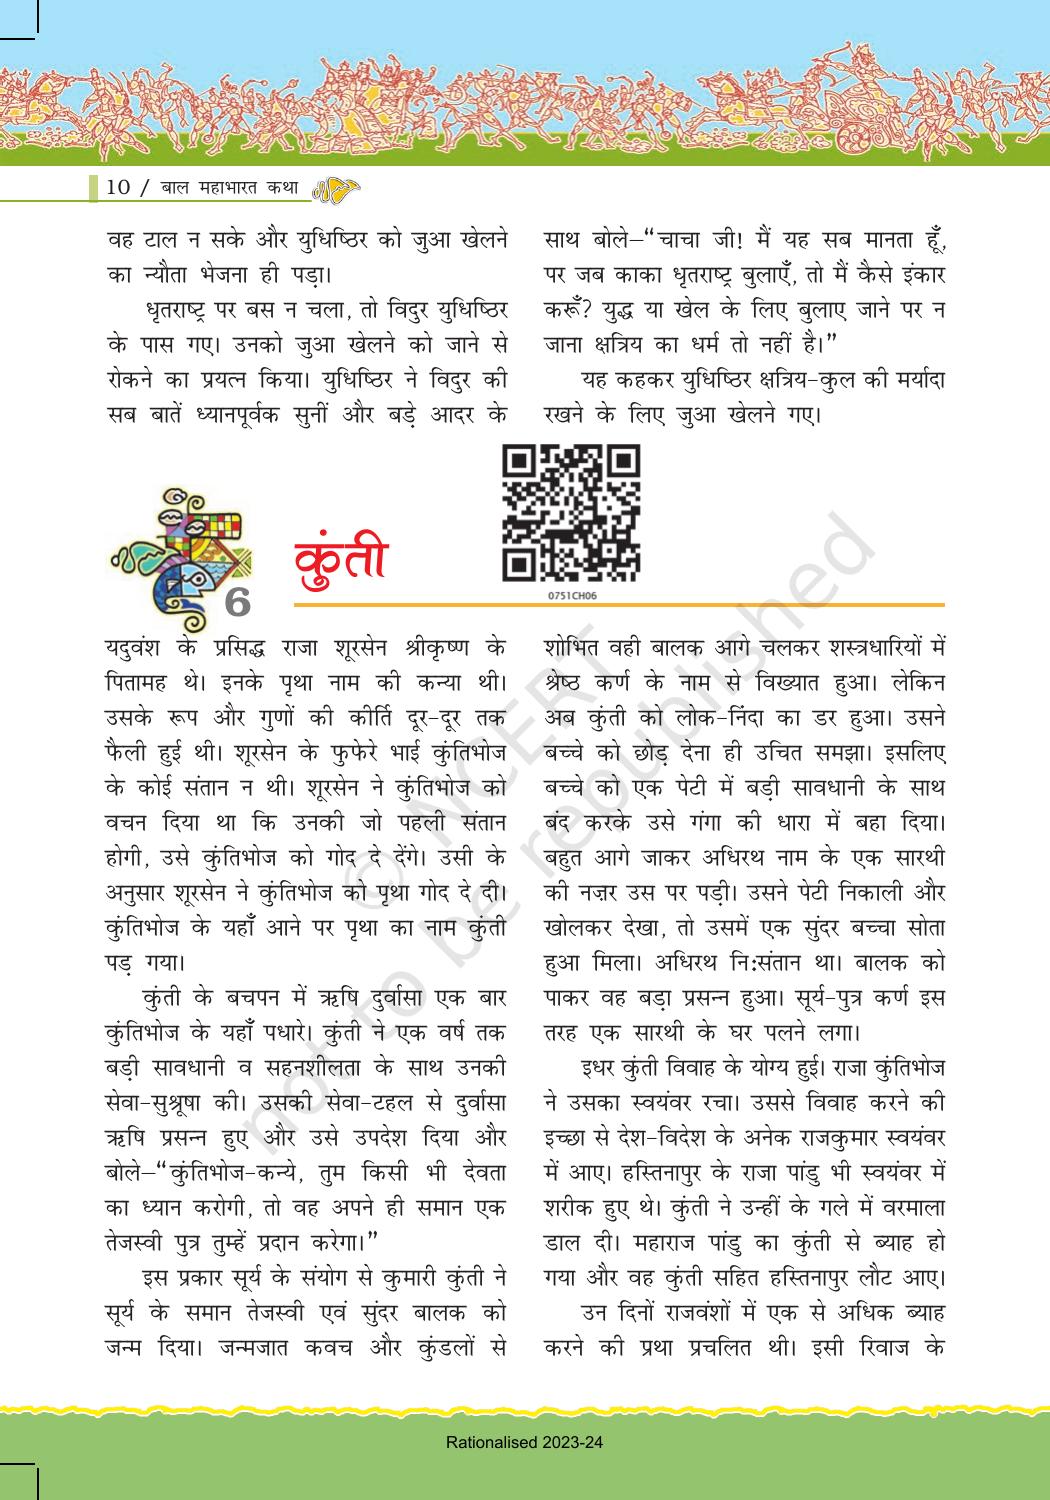 NCERT Book for Class 7 Hindi: Chapter 1-बाल महाभारत कथा - Page 10